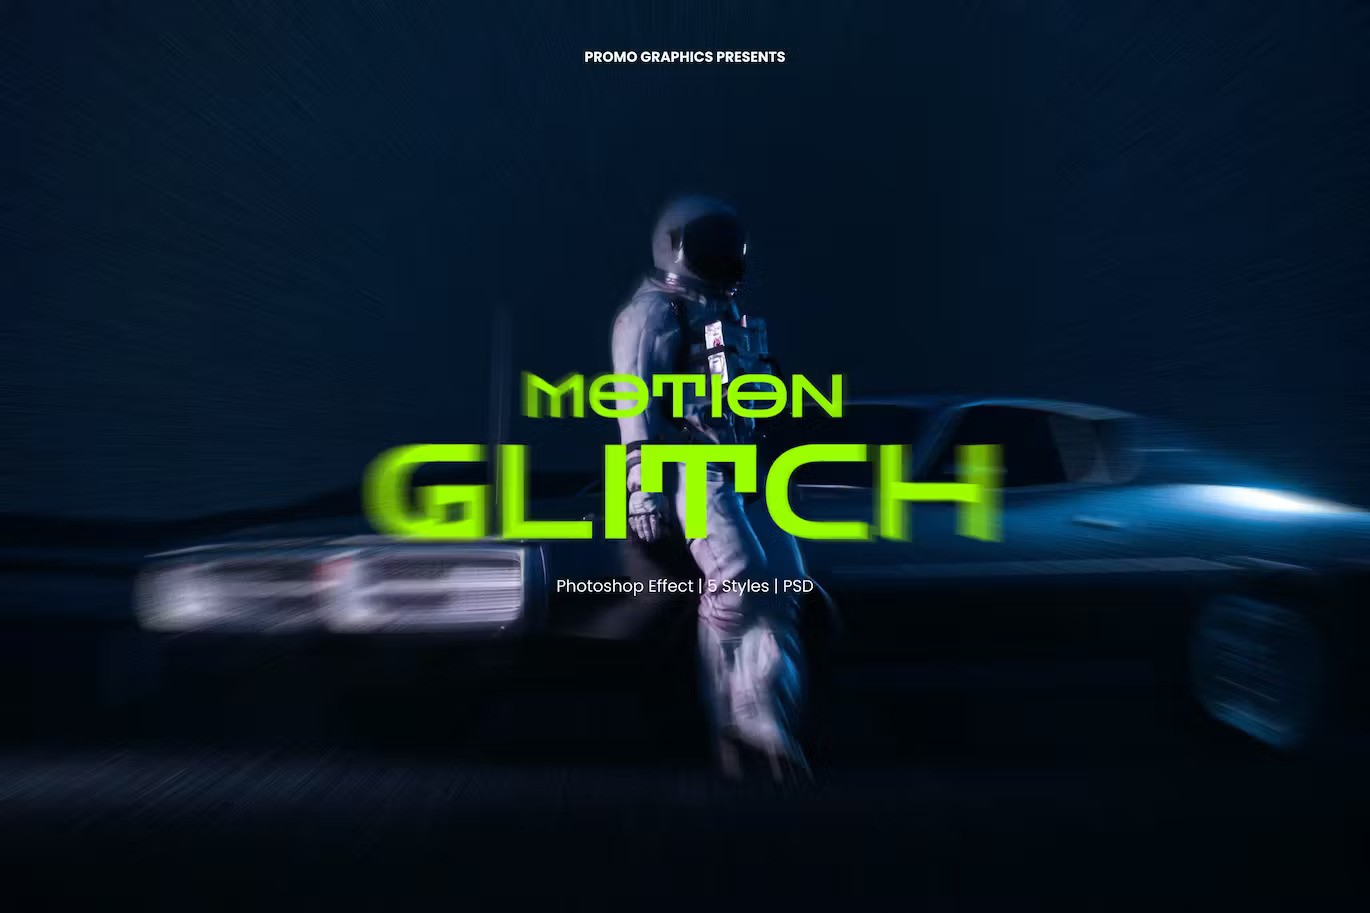 A motion glitch photoshop effect